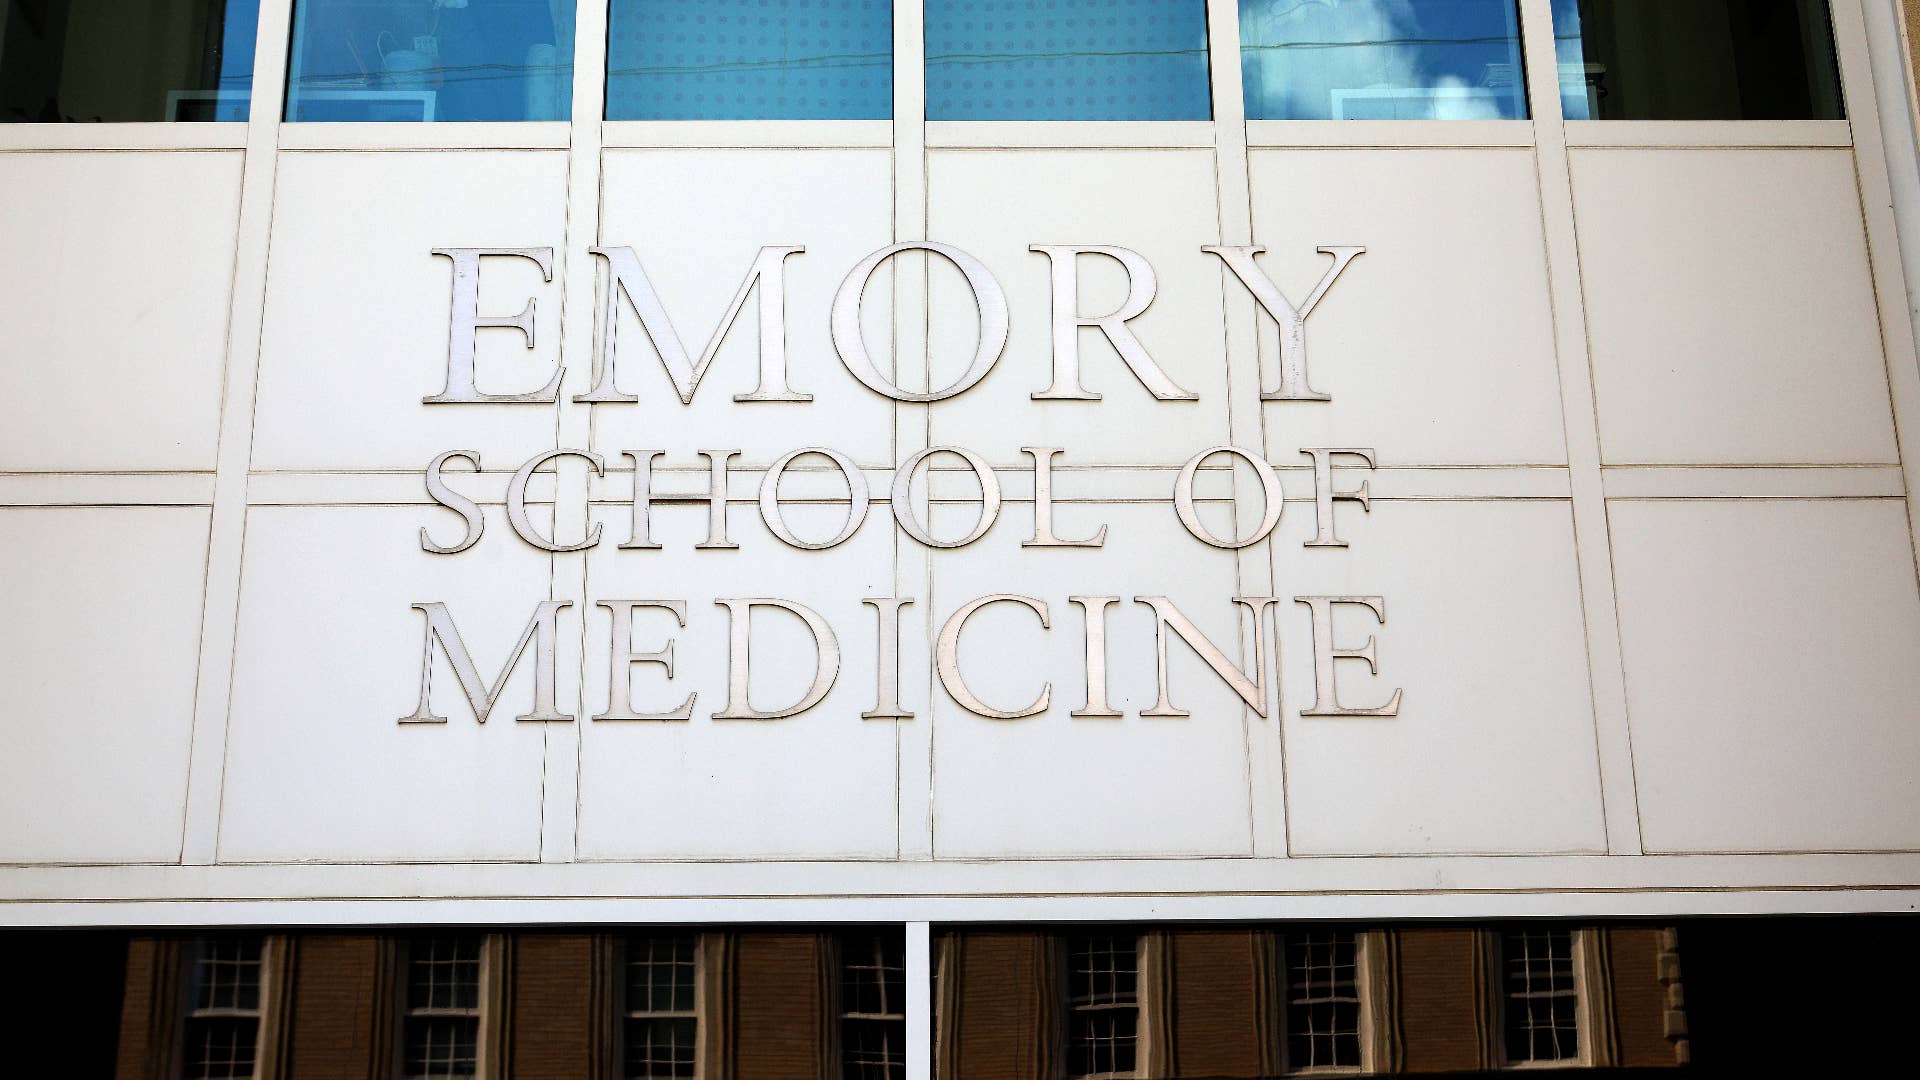 Emory School Of Medicine signage in Atlanta, Georgia.